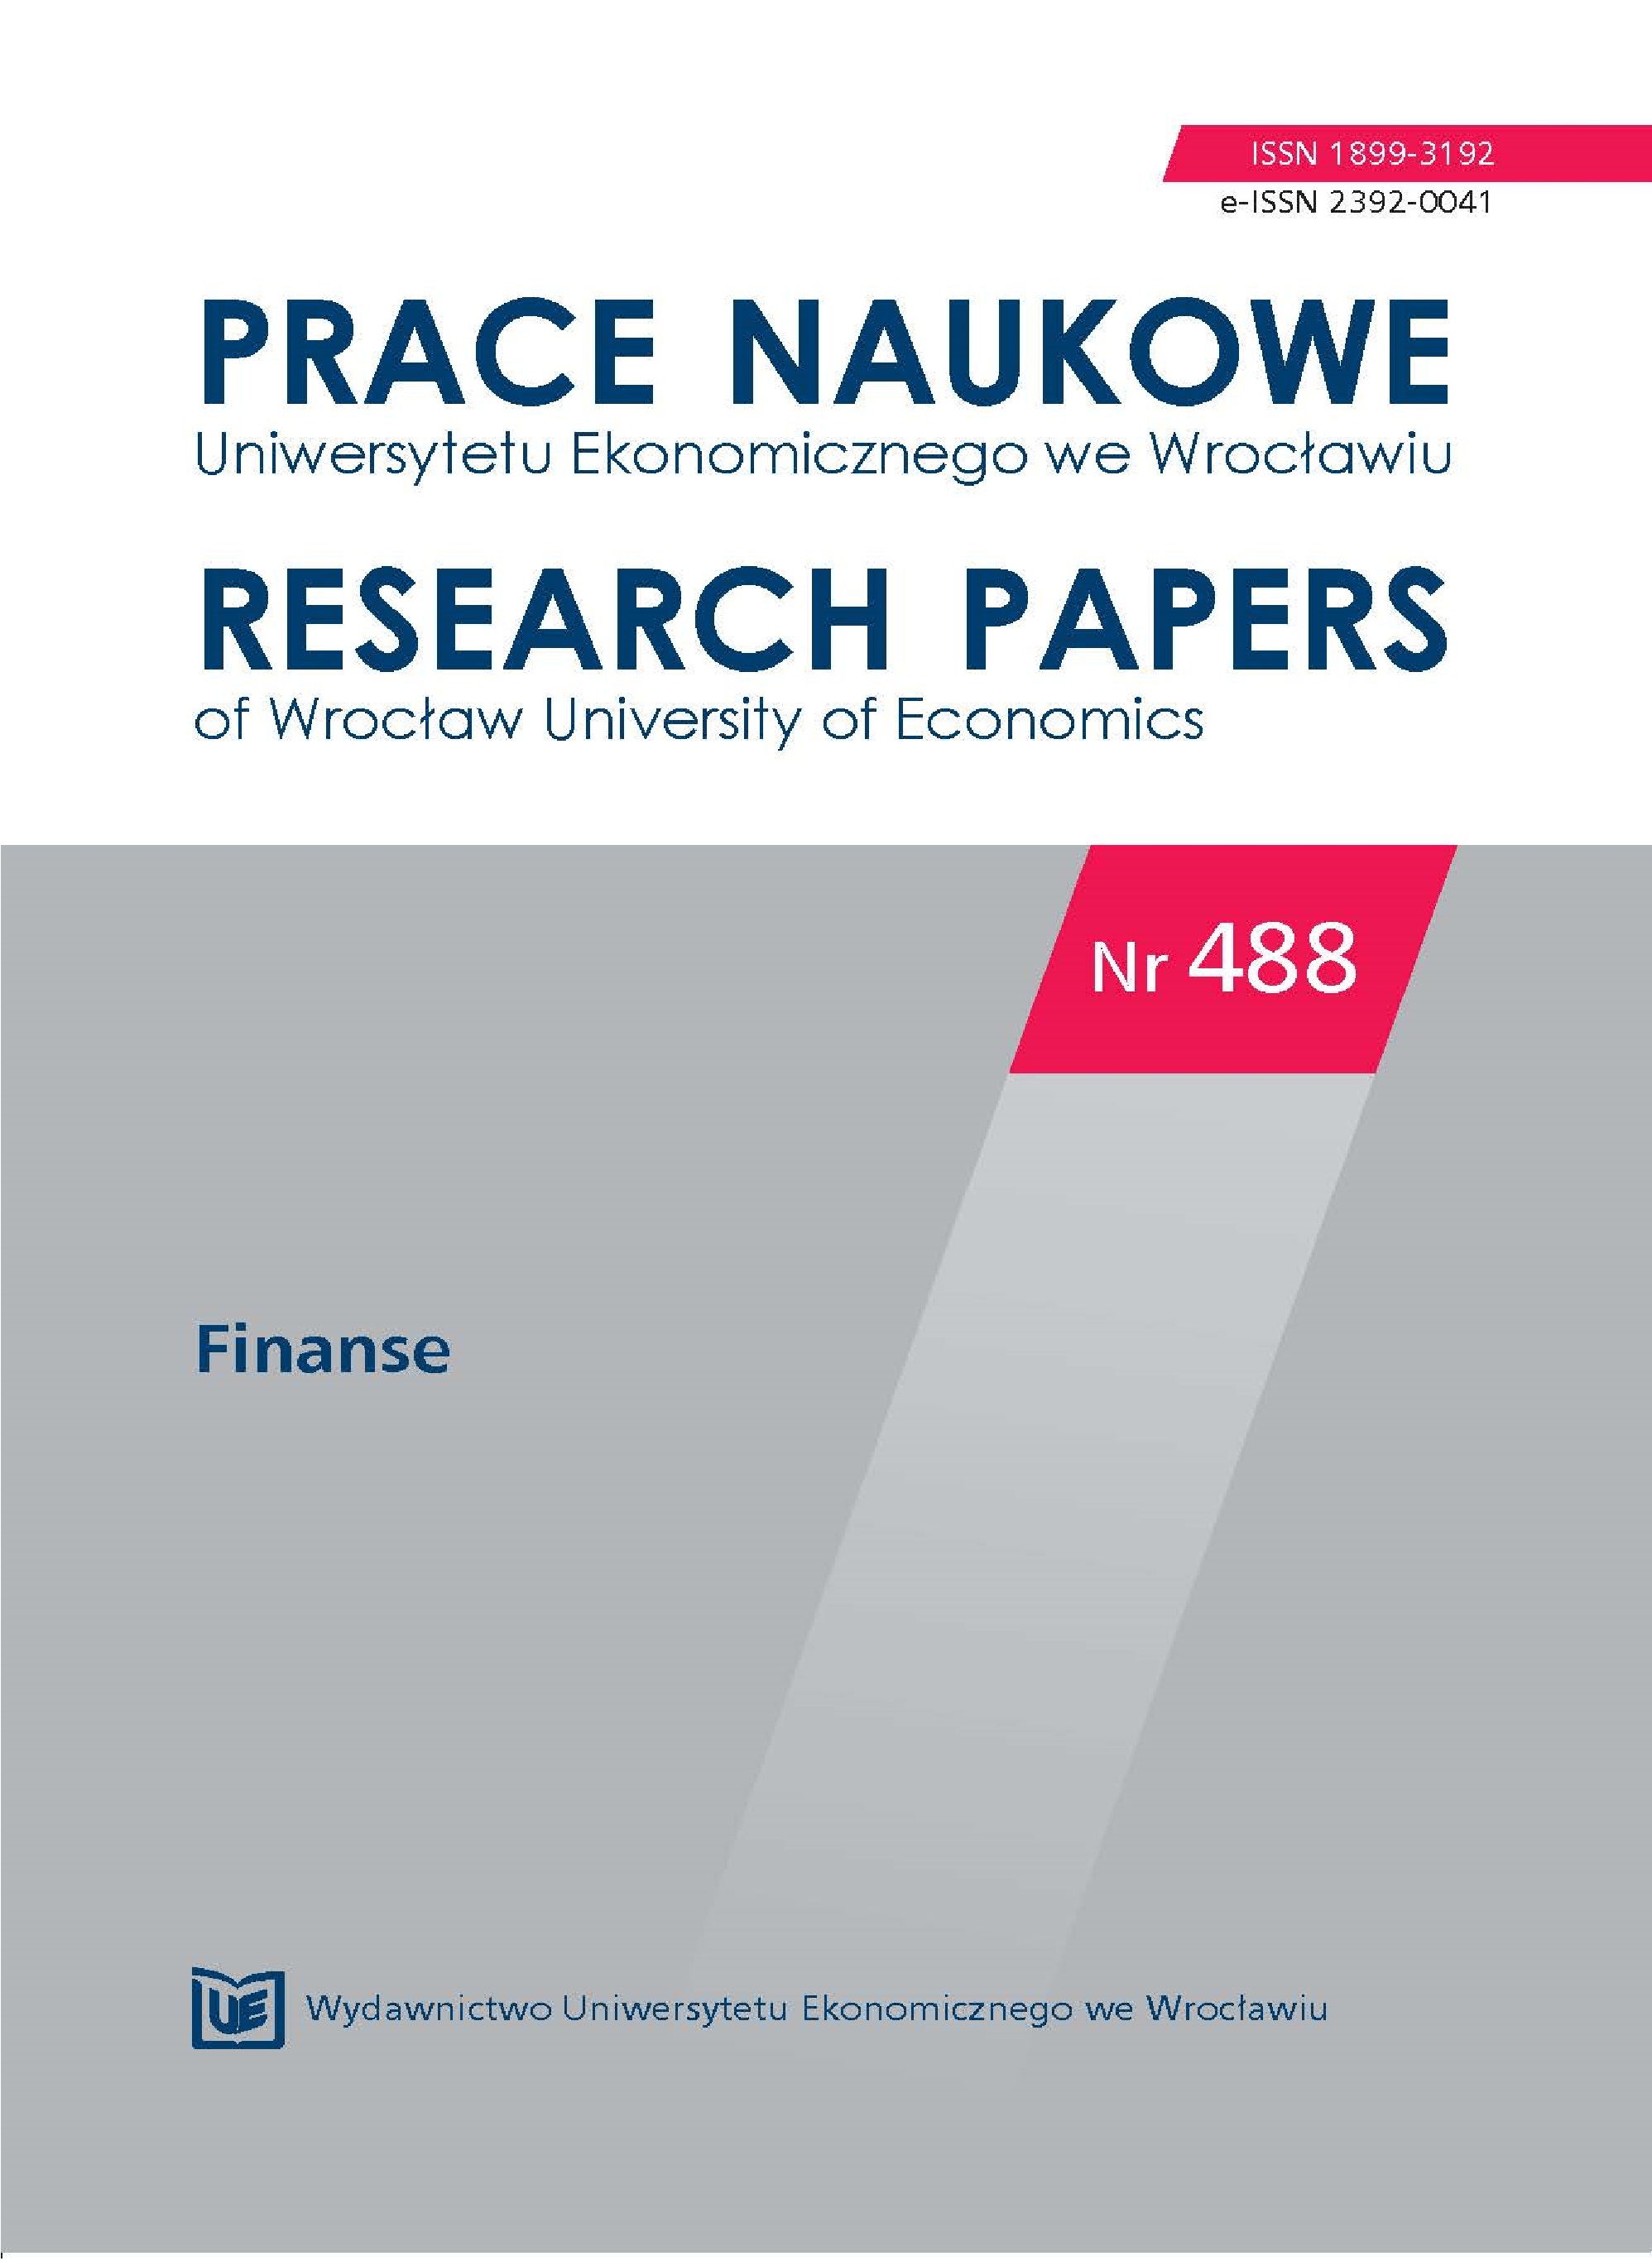 Tax preferences vs. development of IKZE in Poland Cover Image